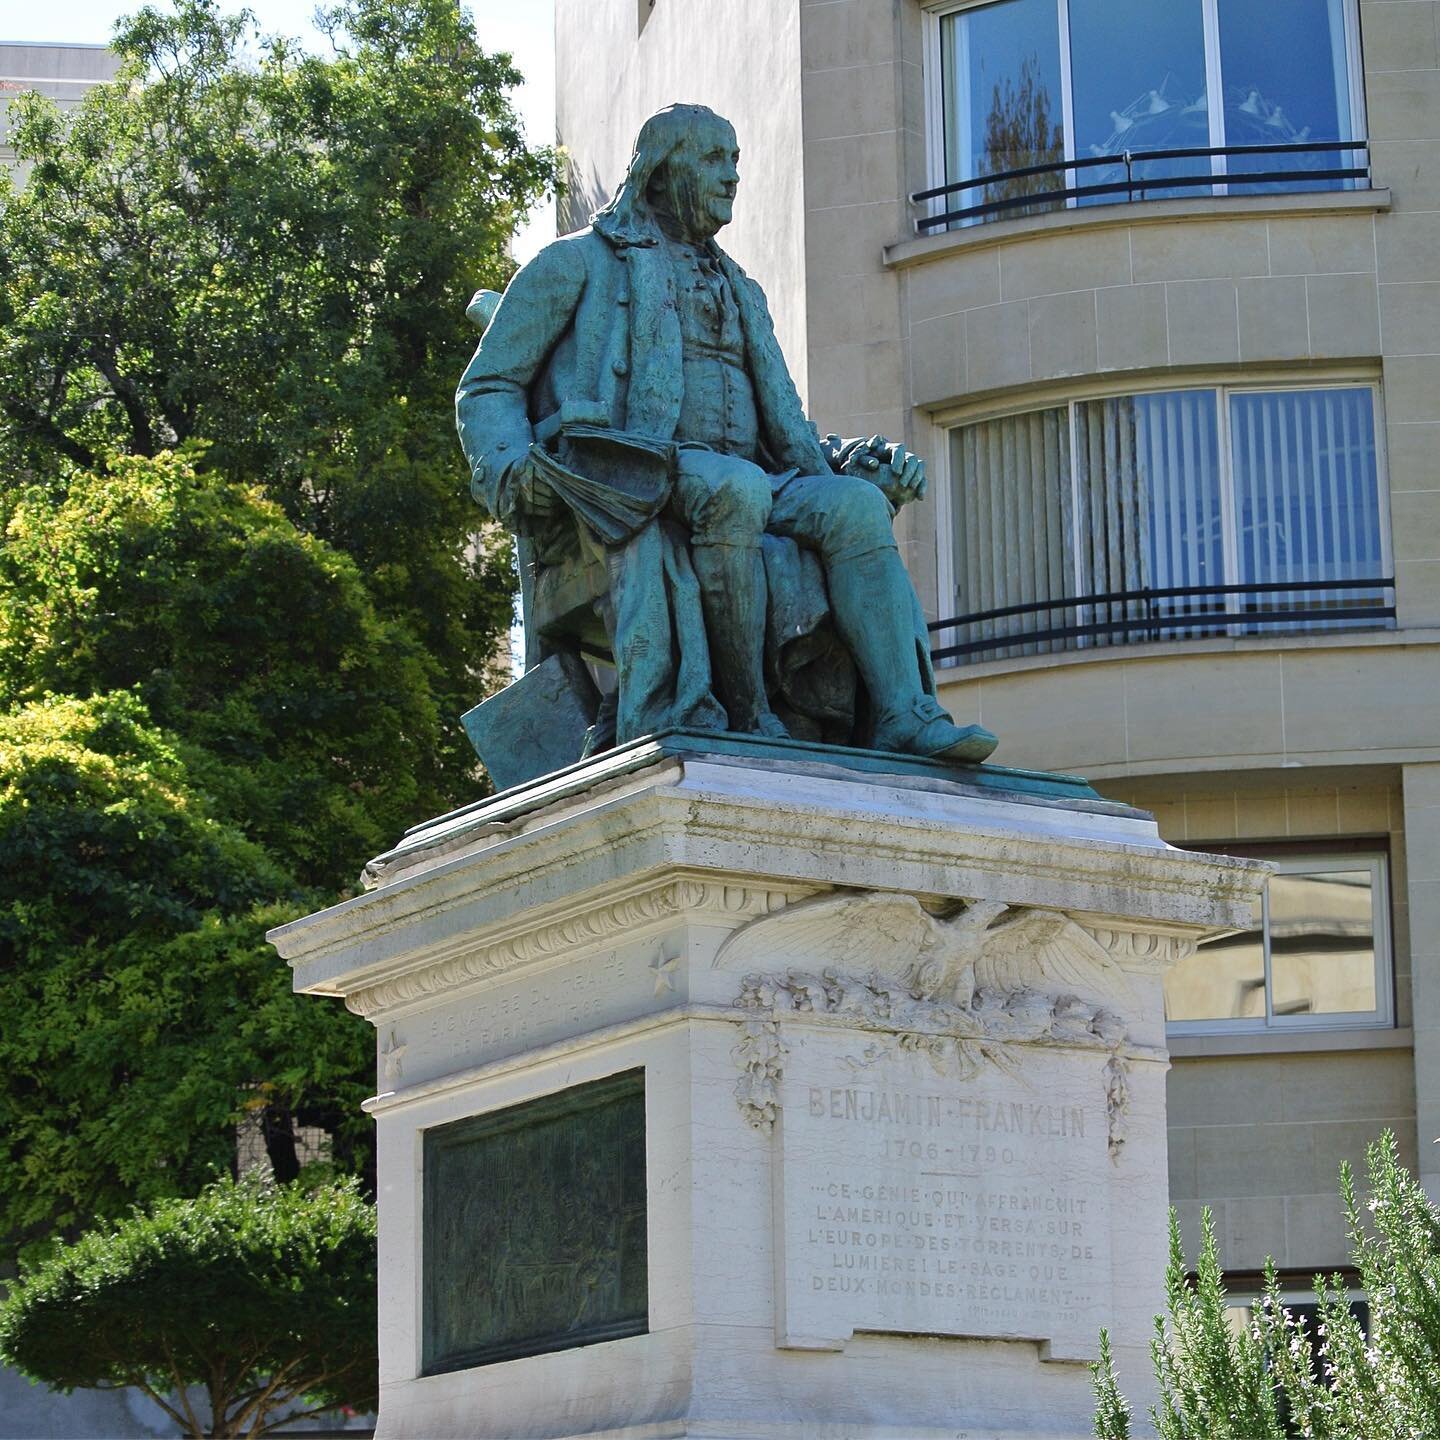 Benjamin-Franklin-Statue-Parisology.jpg